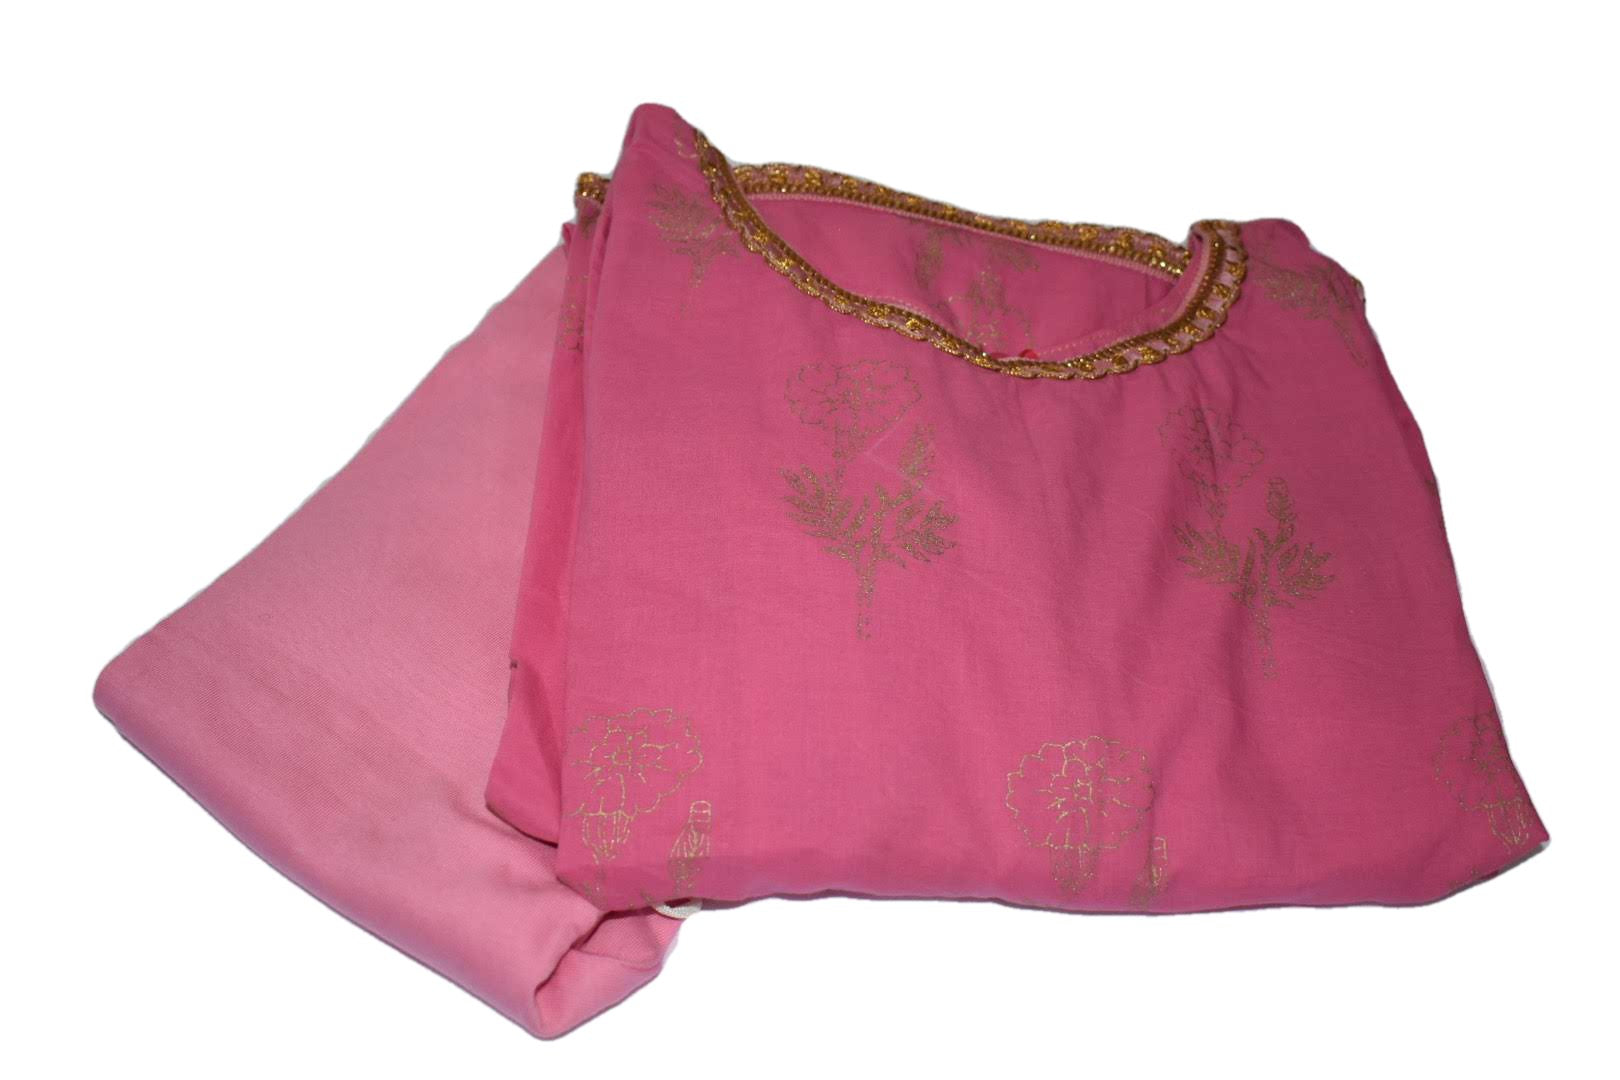 Pink Color - Gold Block Emboss Print - Gold Zari Lace - Cotton Anarkali Kurti Kameez Set